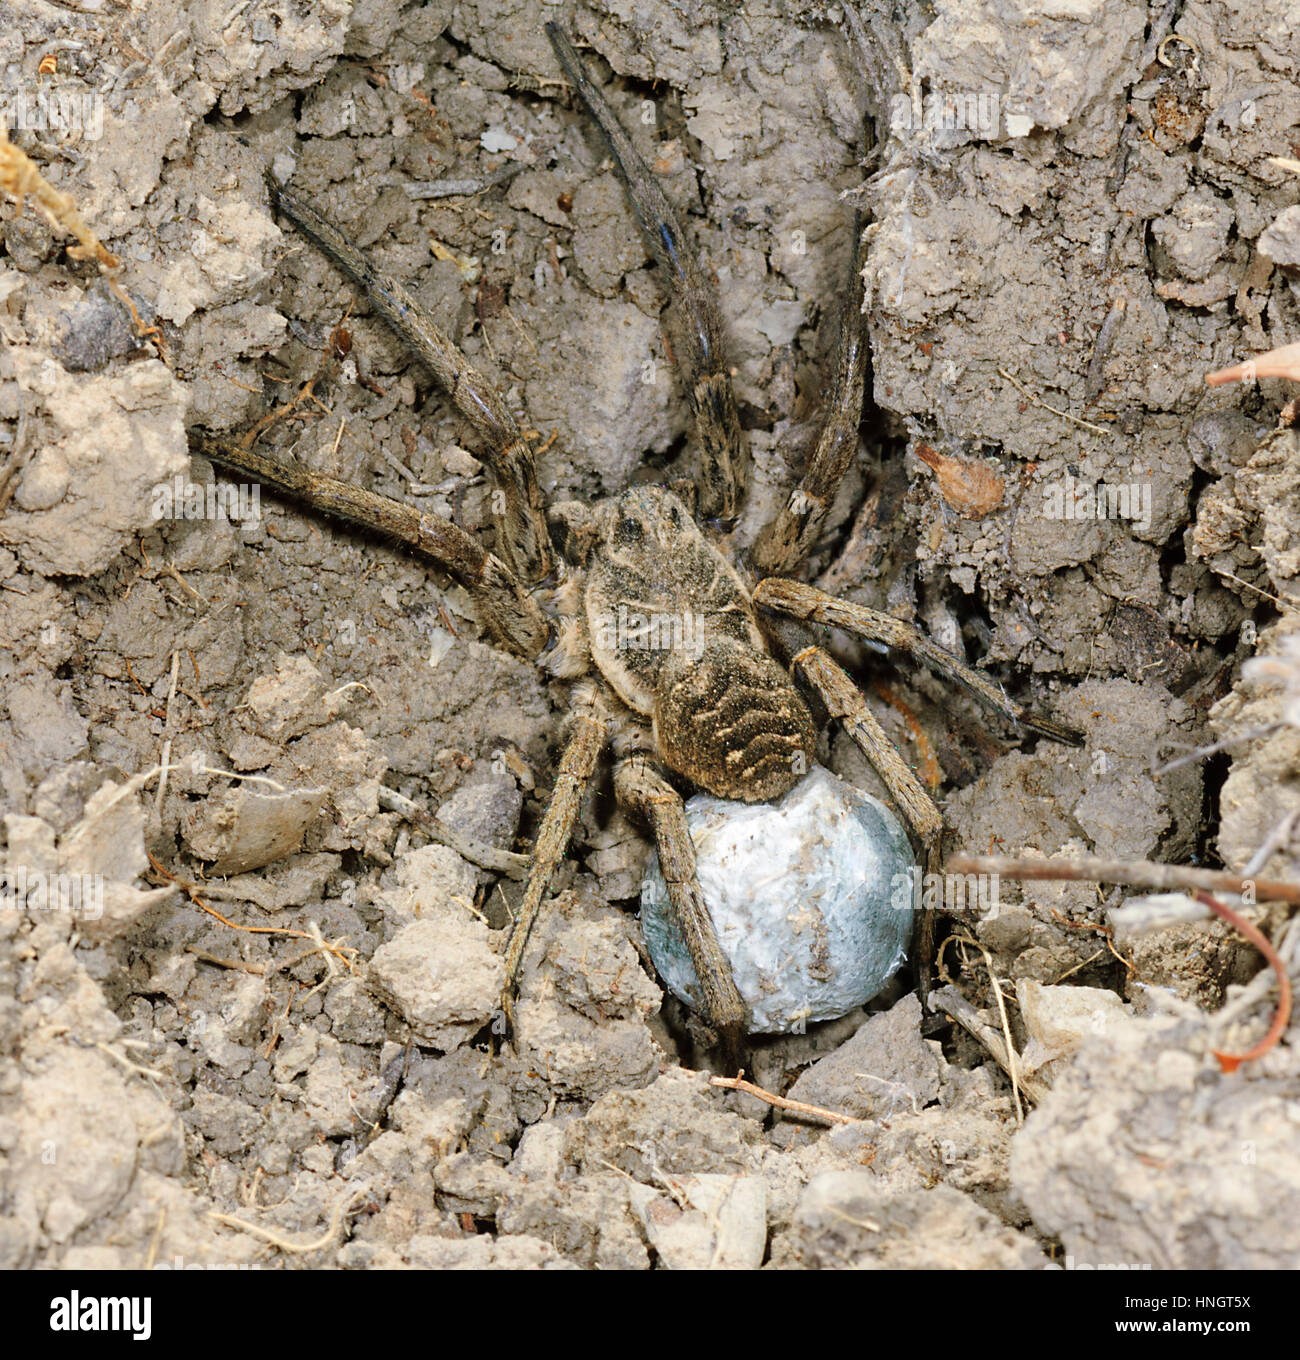 Wolf Spider (Tasmanicosa leuckarti, formerly Lycosa leuckarti) with egg sac, Wentworth, New South Wales, Australia Stock Photo